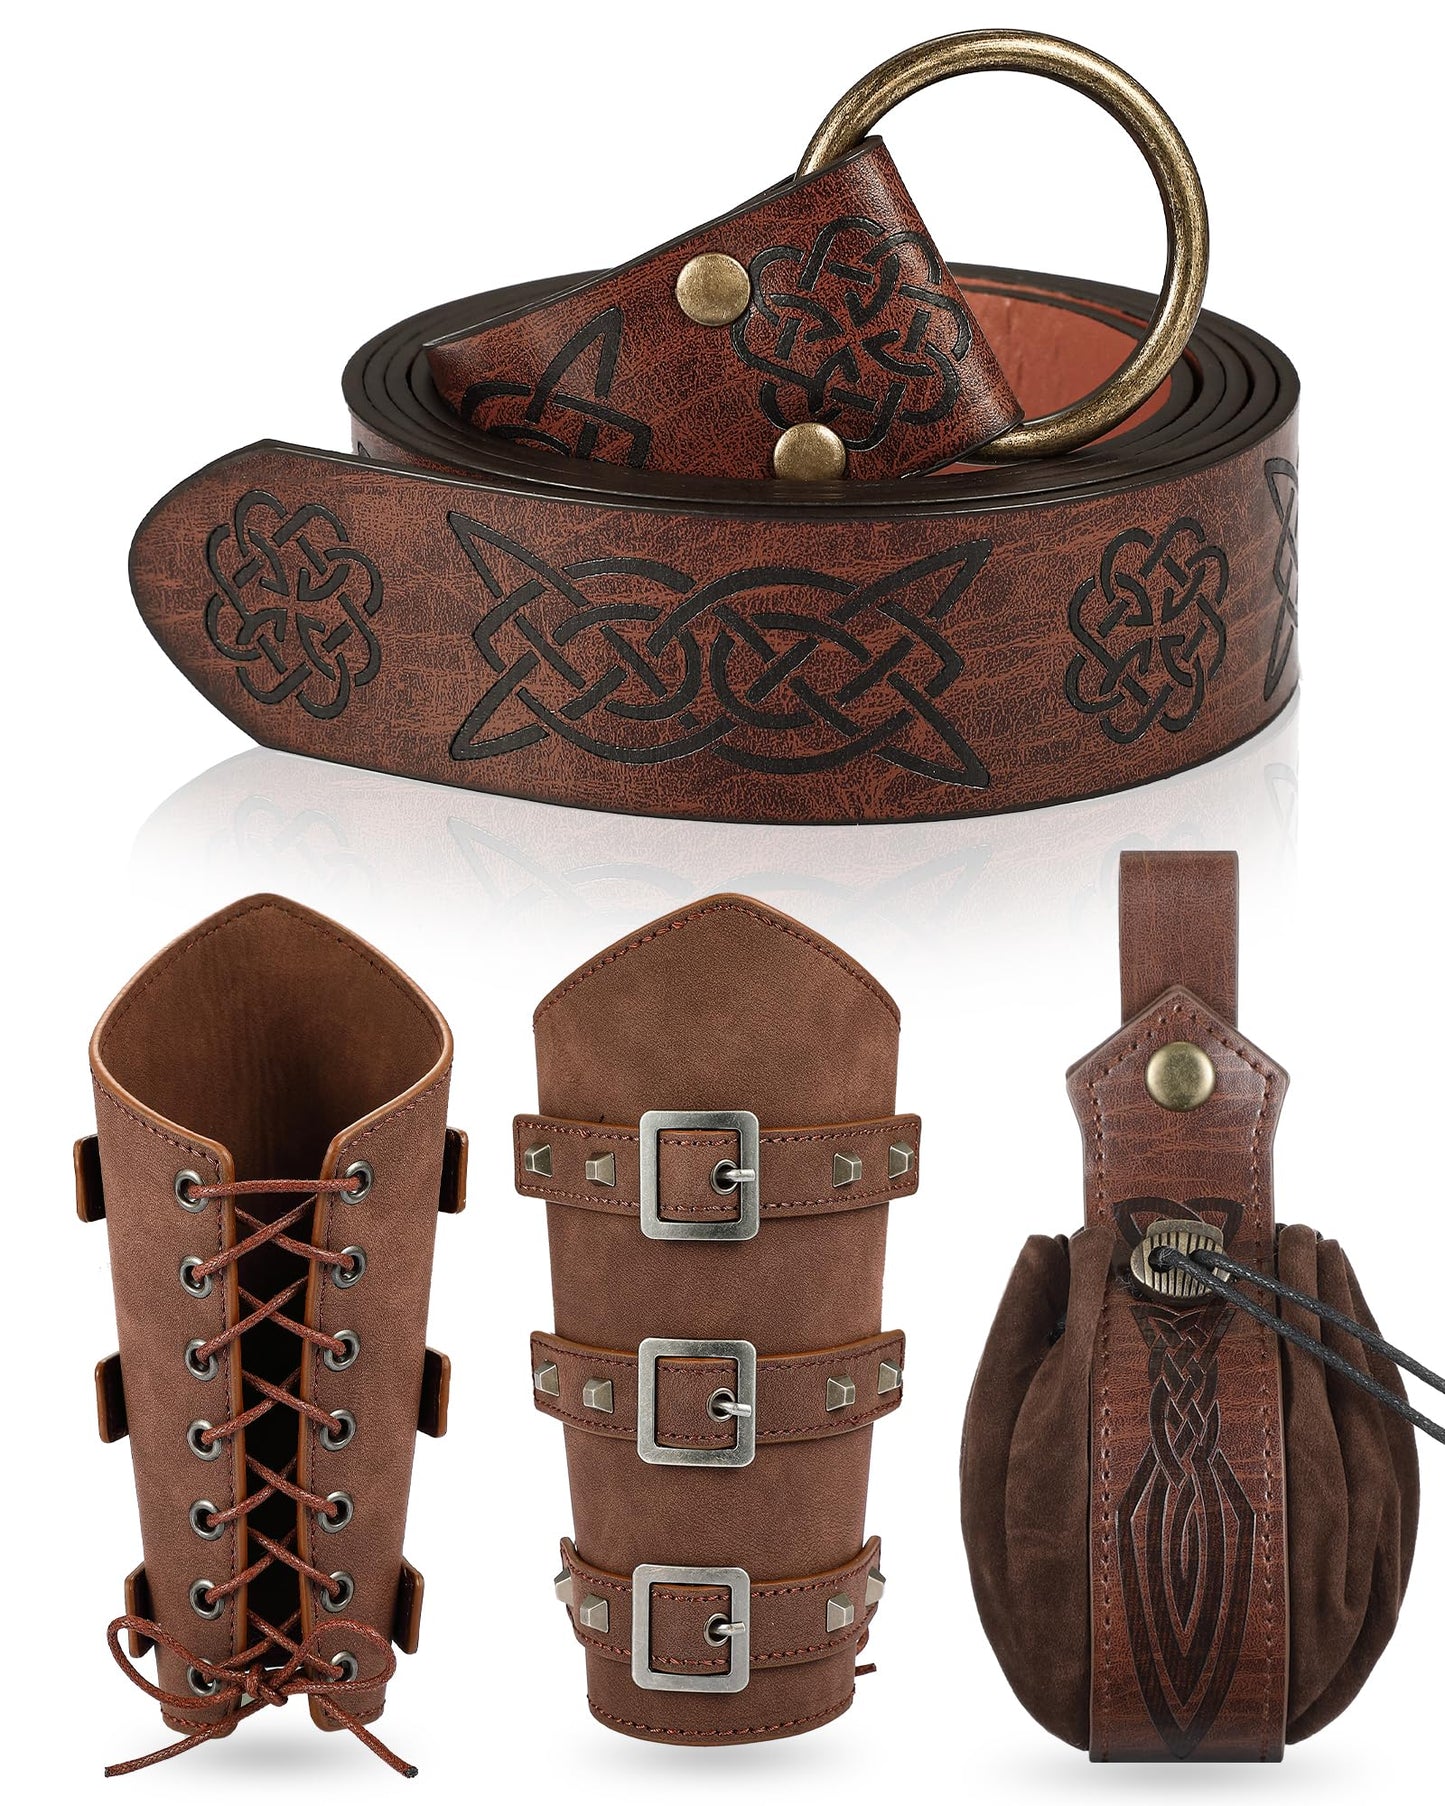  HiiFeuer Medieval PU Leather Buckle Arm Bracers